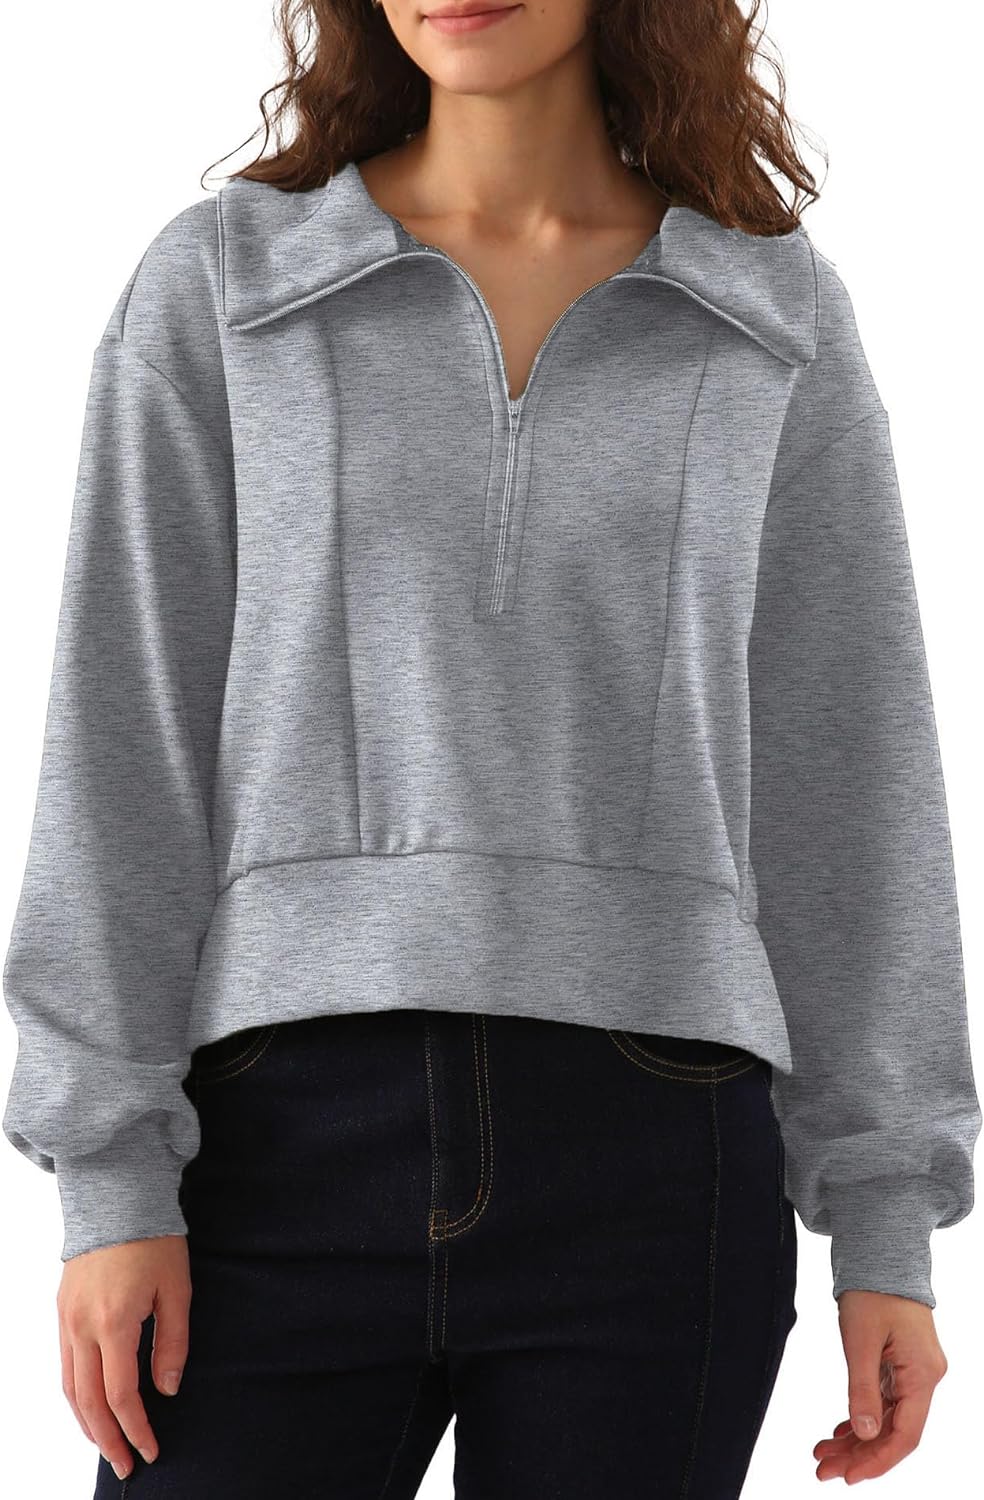 NTG Fad Heather Grey / XX-Large Cropped Quarter Zip Sweatshirts Slightly Crop Tops